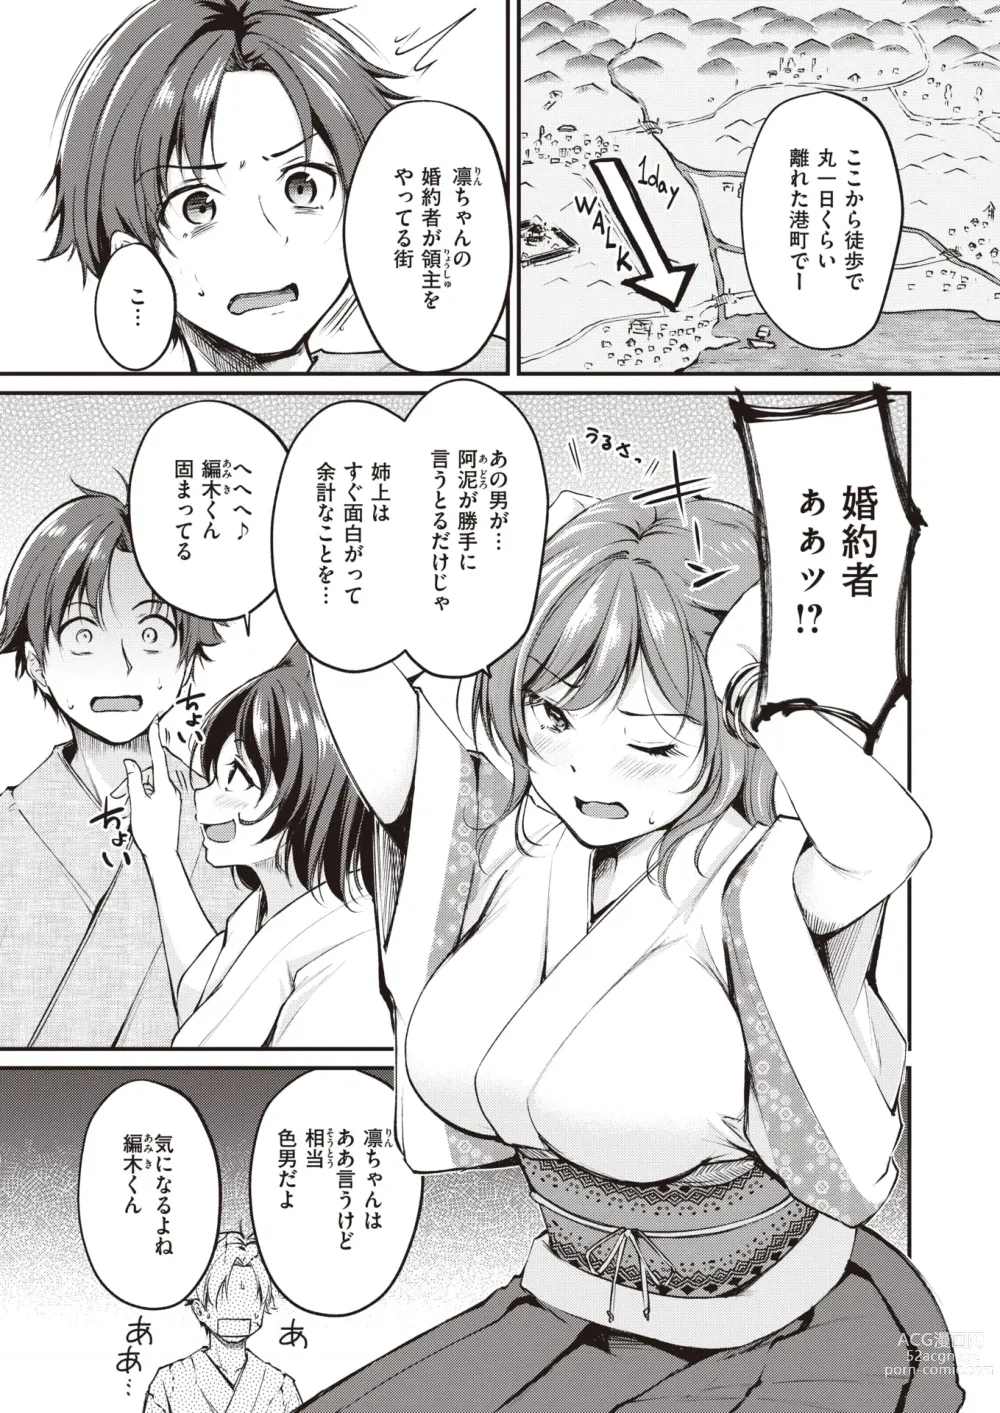 Page 28 of manga Isekai Rakuten Vol. 23